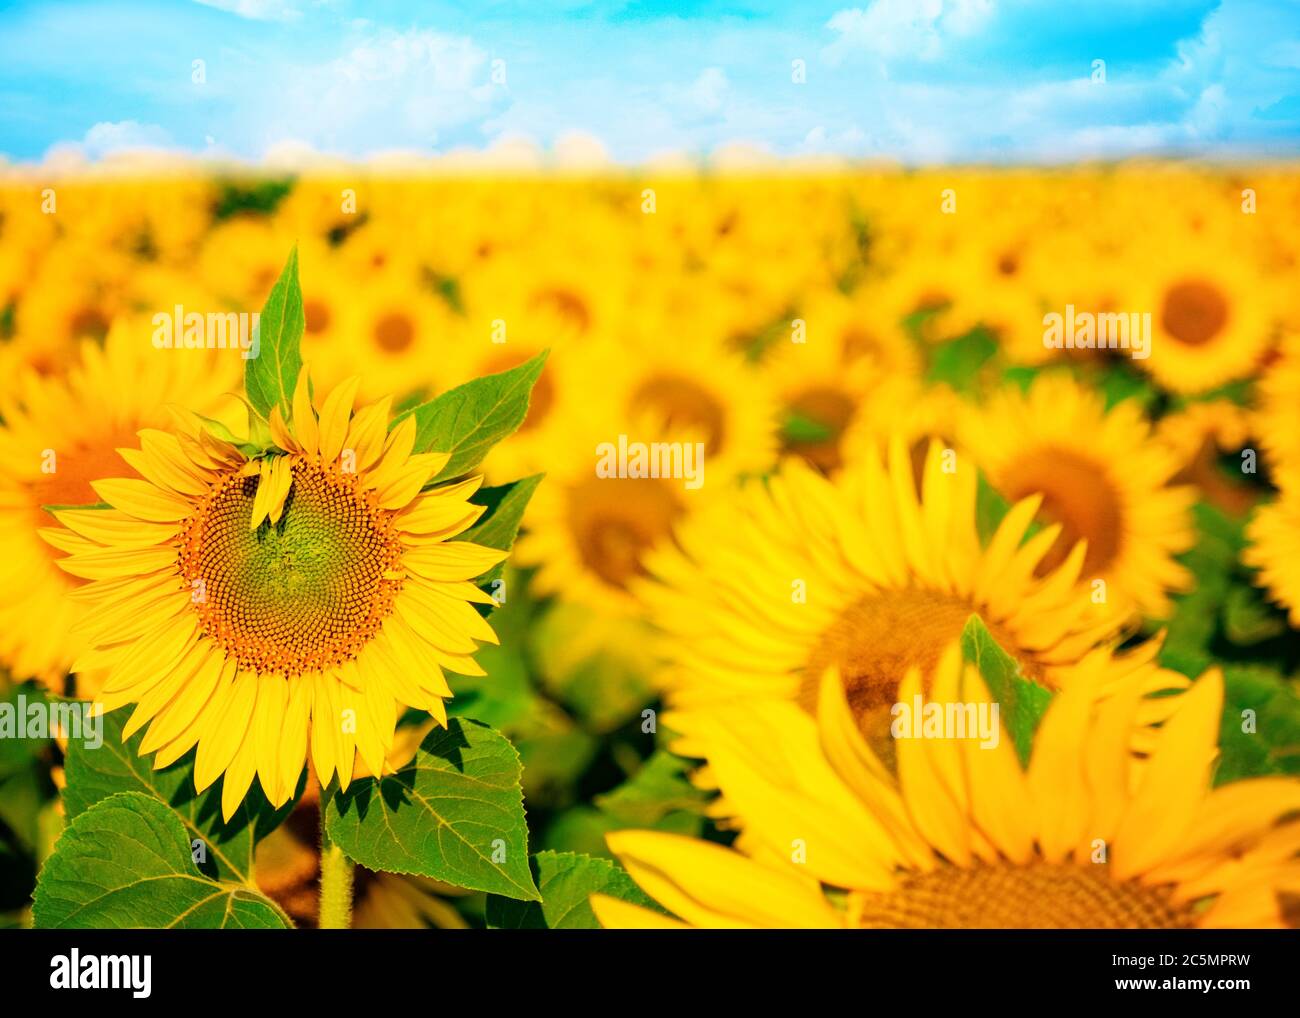 Flowering sunflower in the field Stock Photo